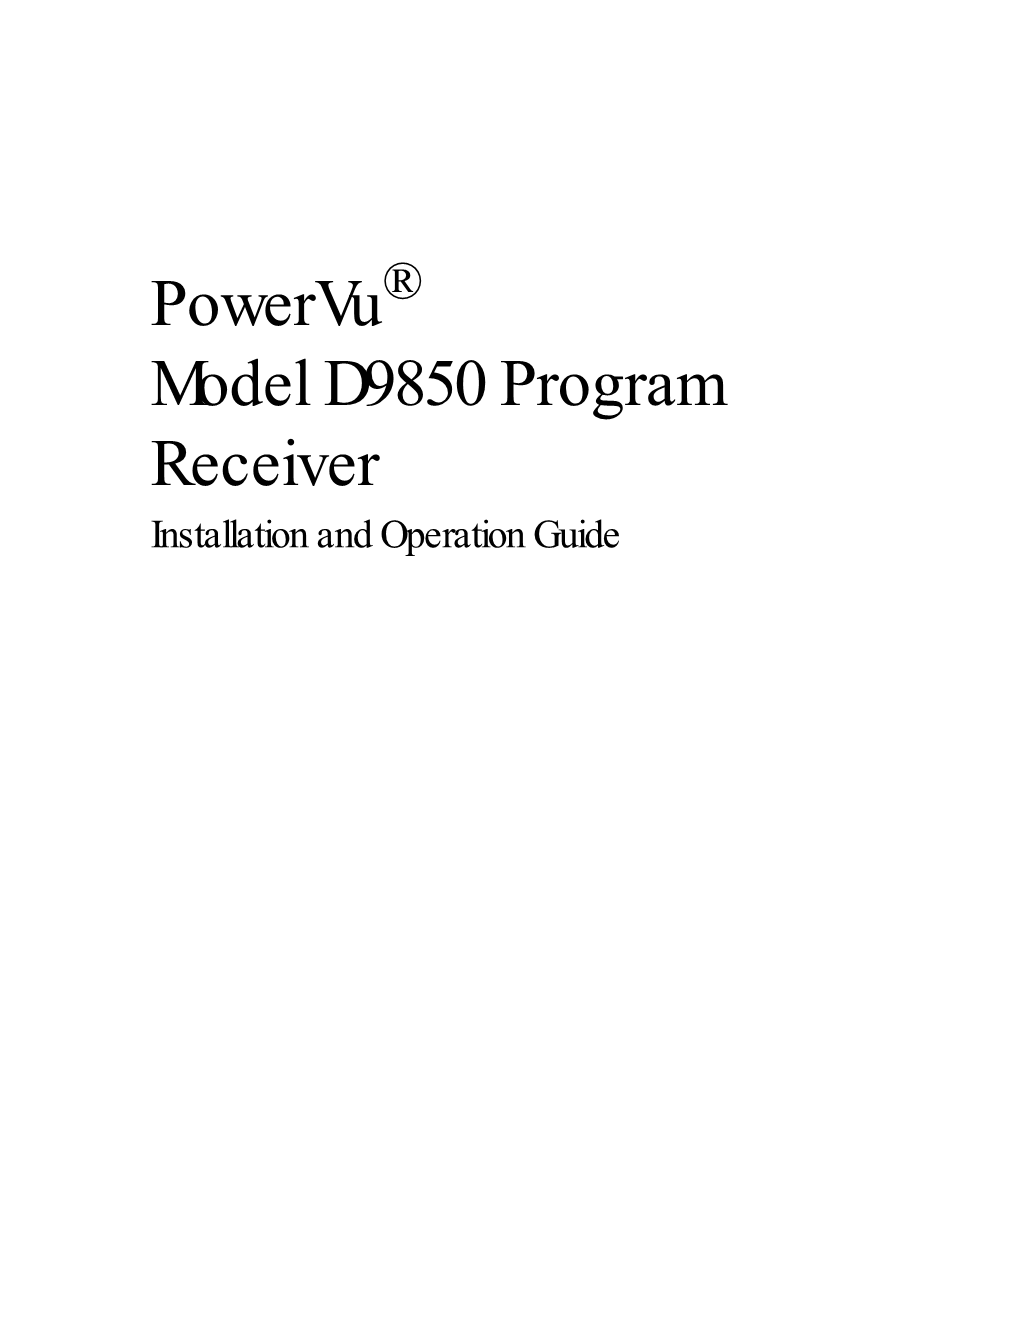 Powervu Model D9850 Program Receiver Installation and Operation